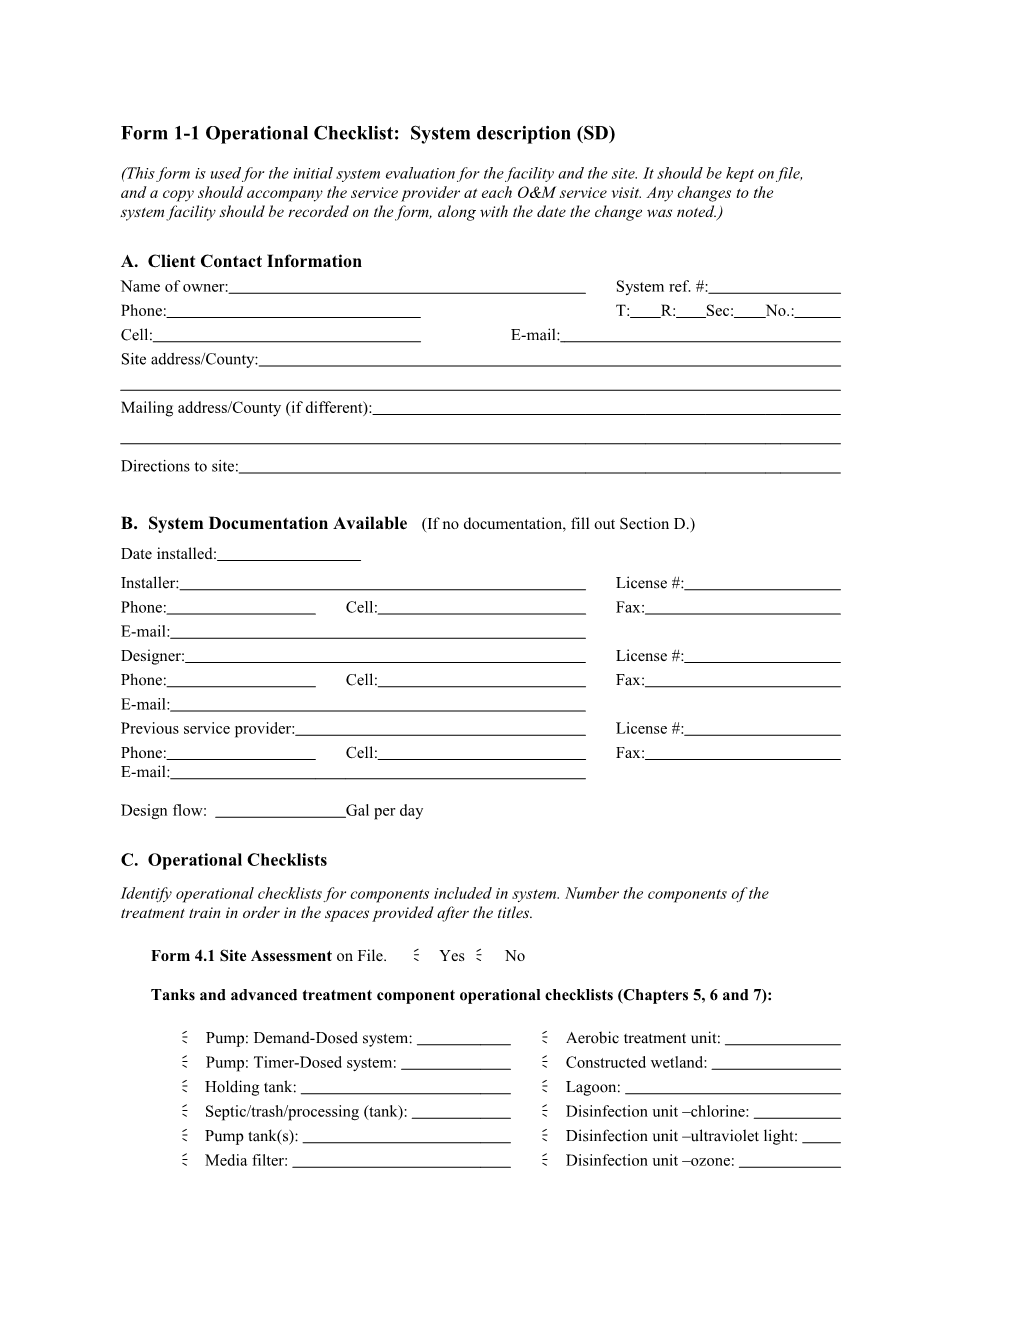 Form 1-1 Operational Checklist: System Description (SD)